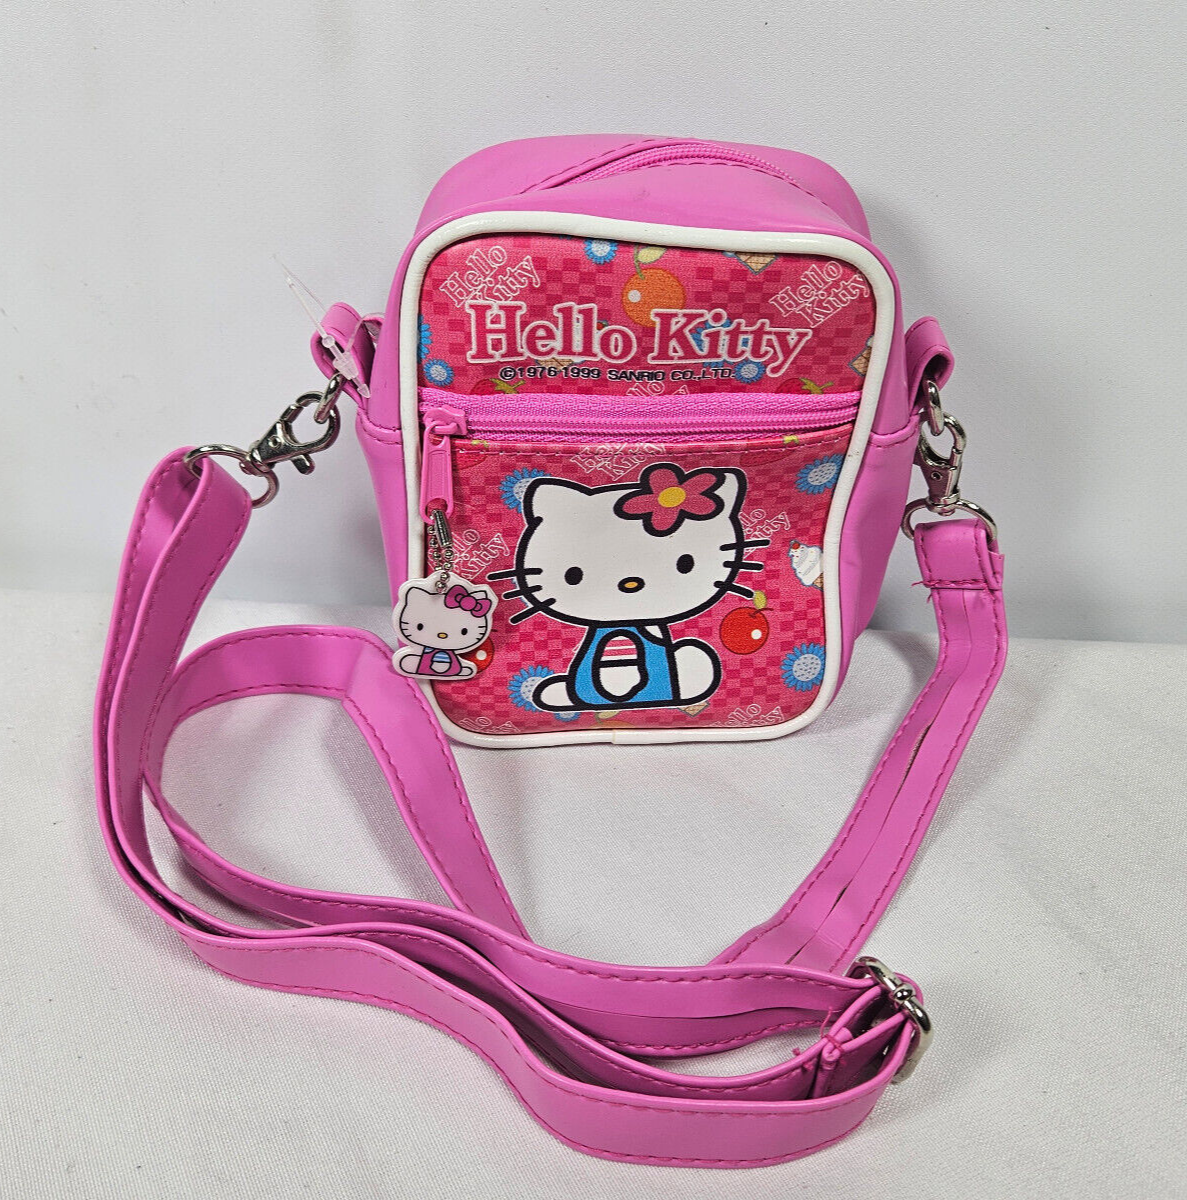 Vintage Hello Kitty 5.5" Miniature Pink Bag Shoulder Strap 1999 Sanrio - $39.95